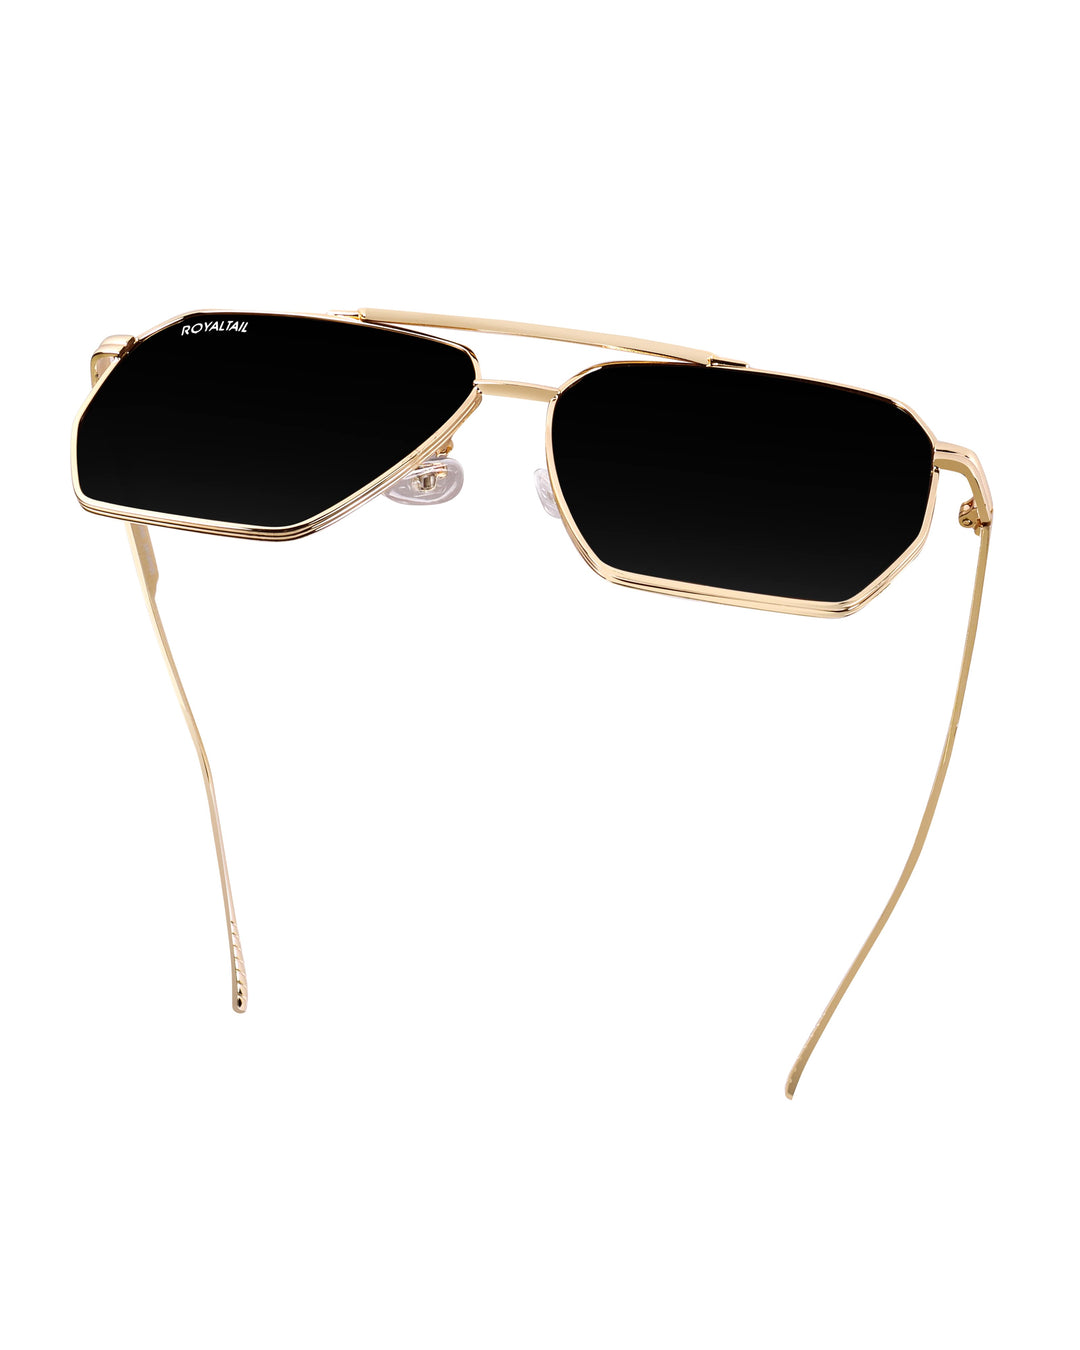 Bottaga Gold Black UV Protected Metal Sunglasses RT060